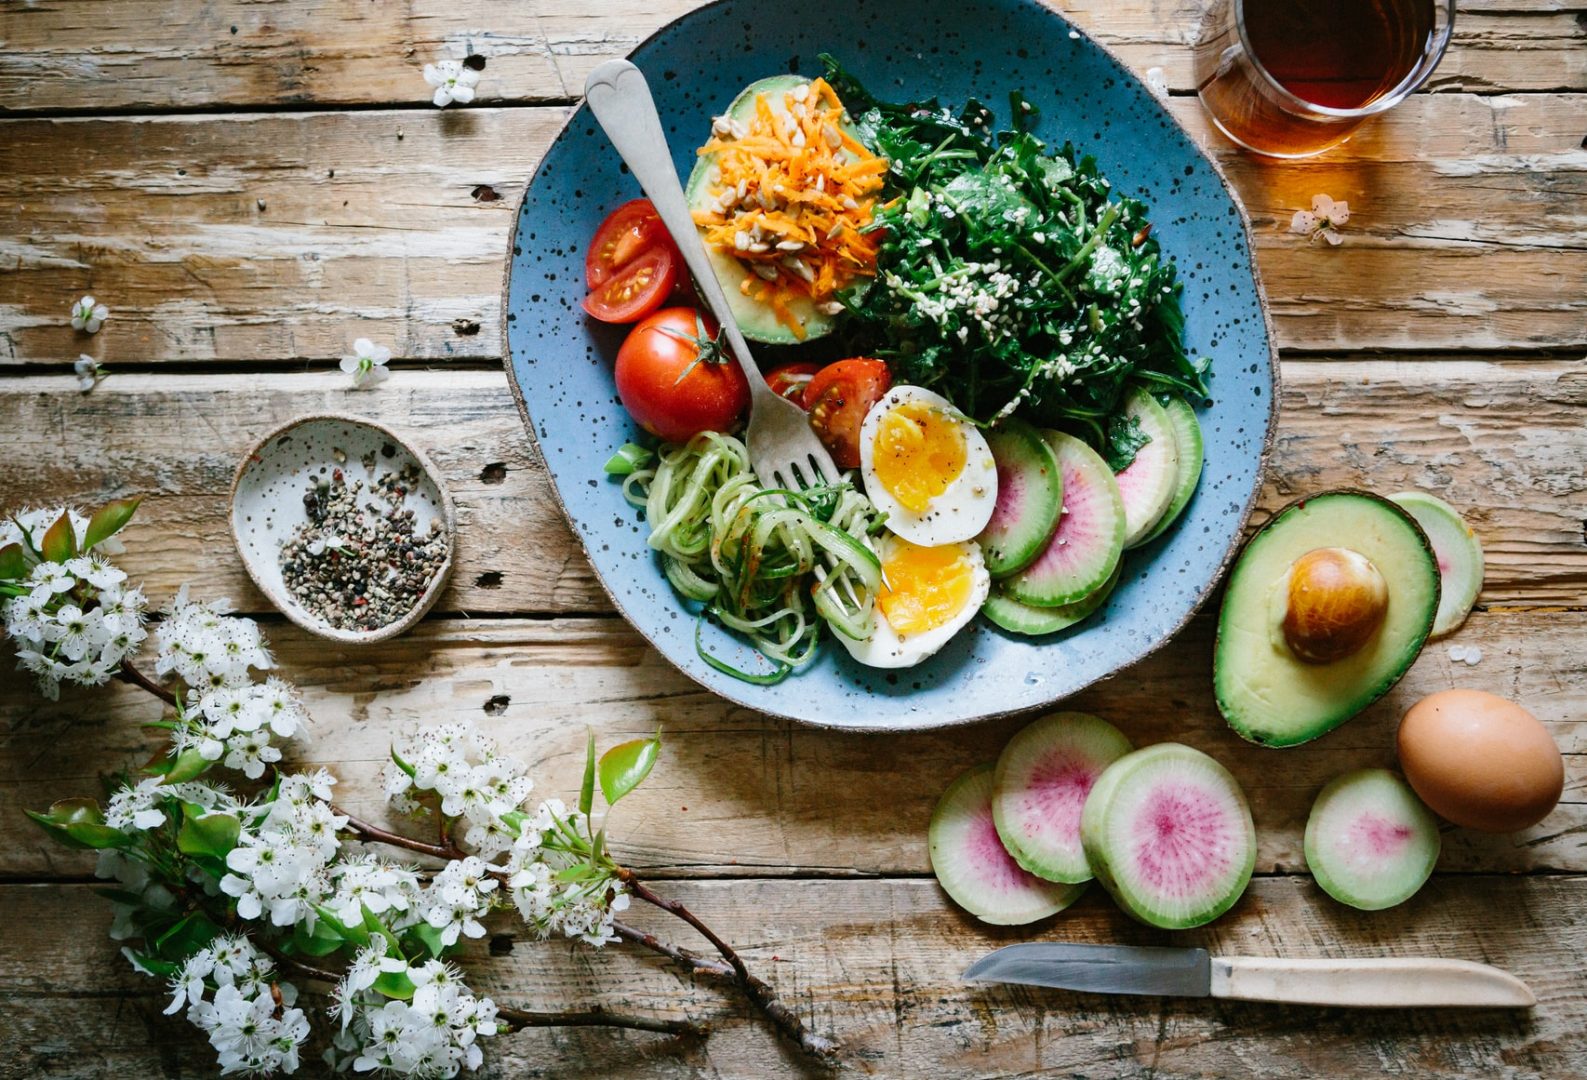 Healing Your Body Through Food